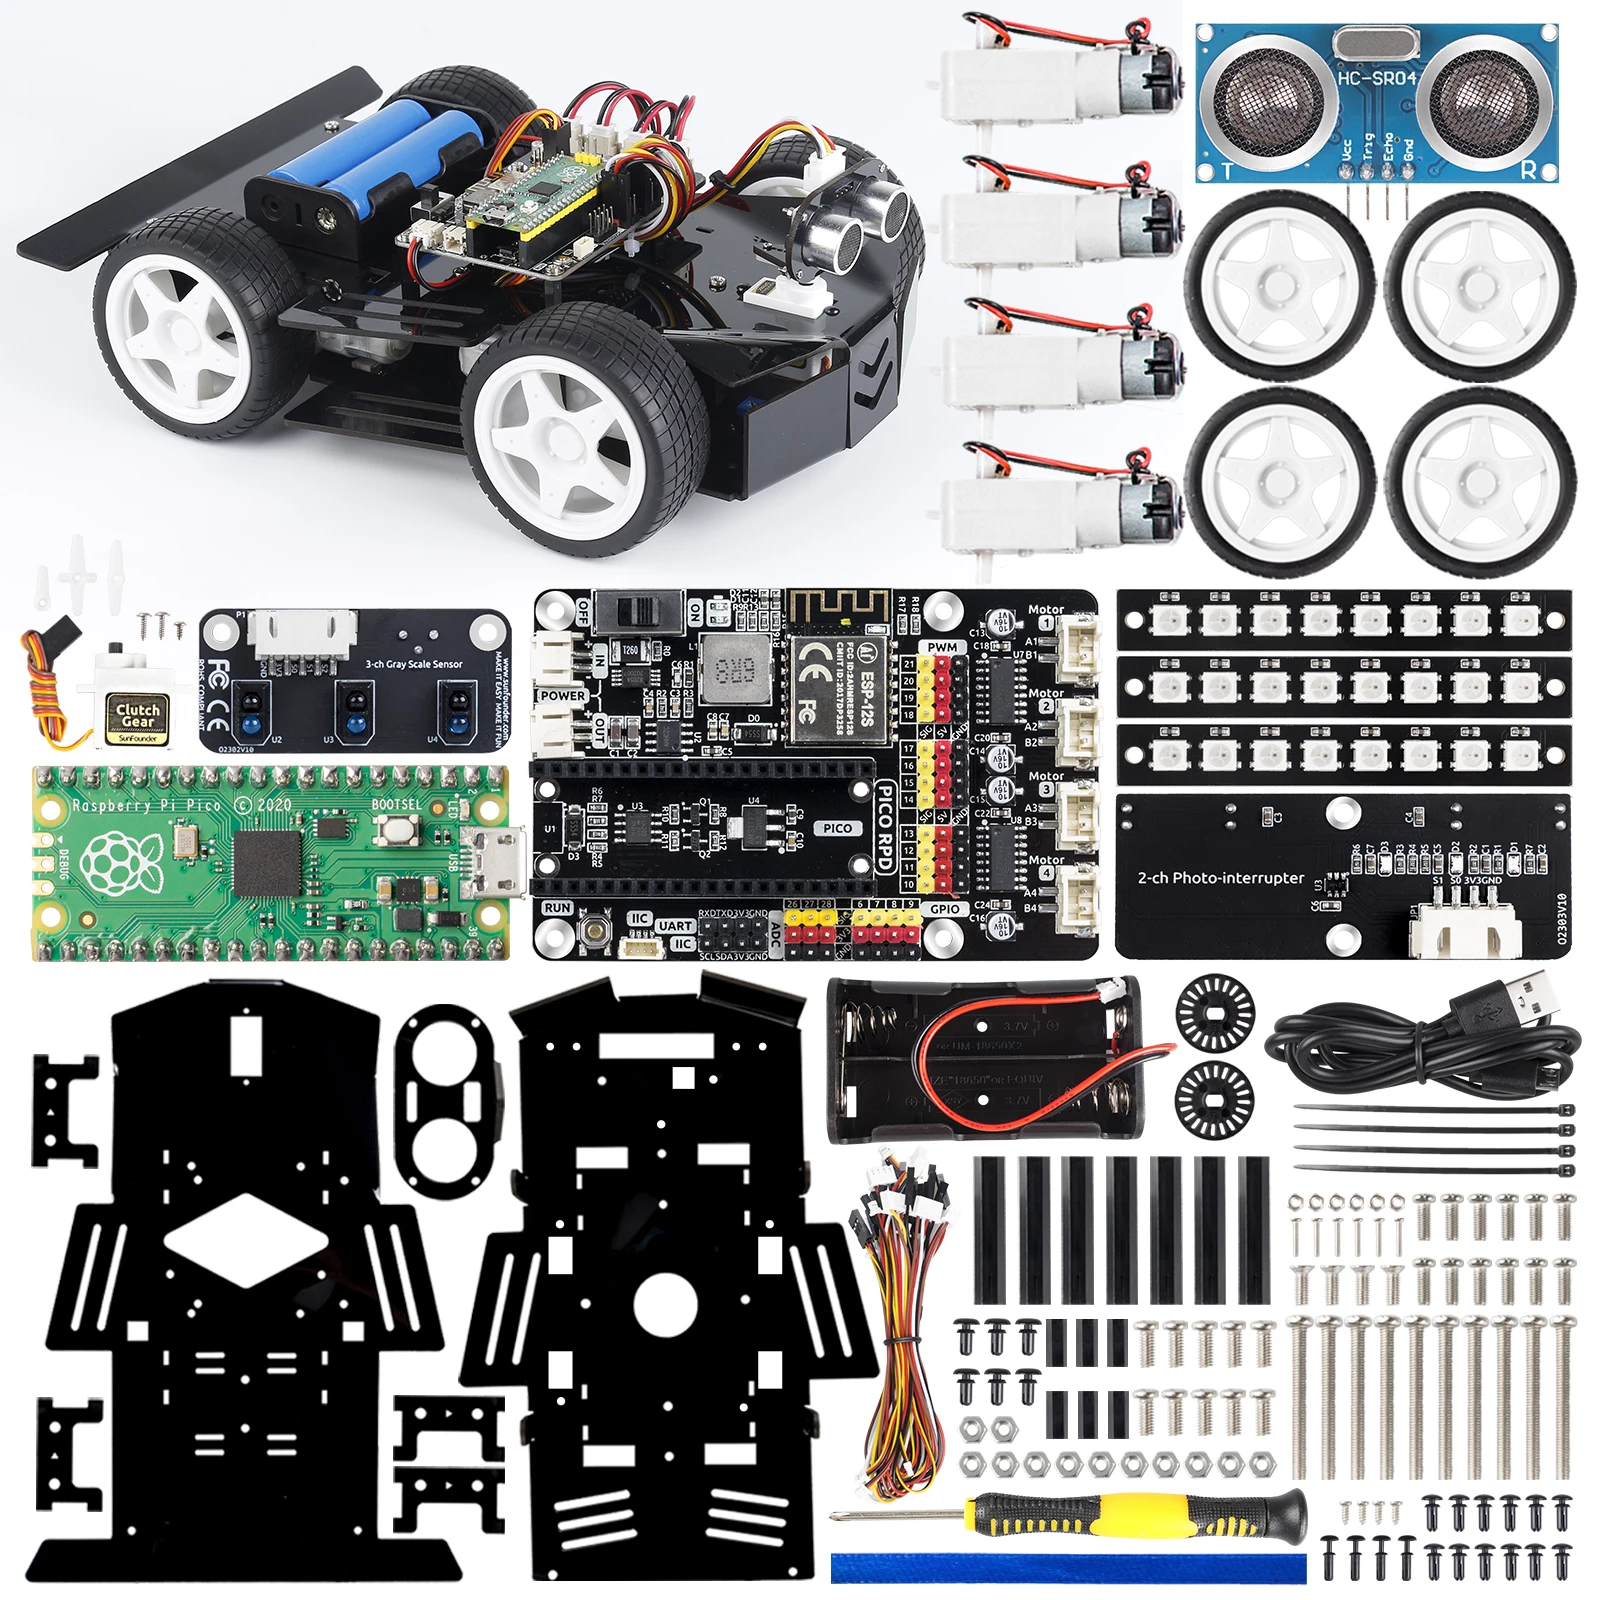 SUNFOUNDER Rechargable Raspberry Pi Pico Robot Car Kit, Open Source, MicroPython, App Control